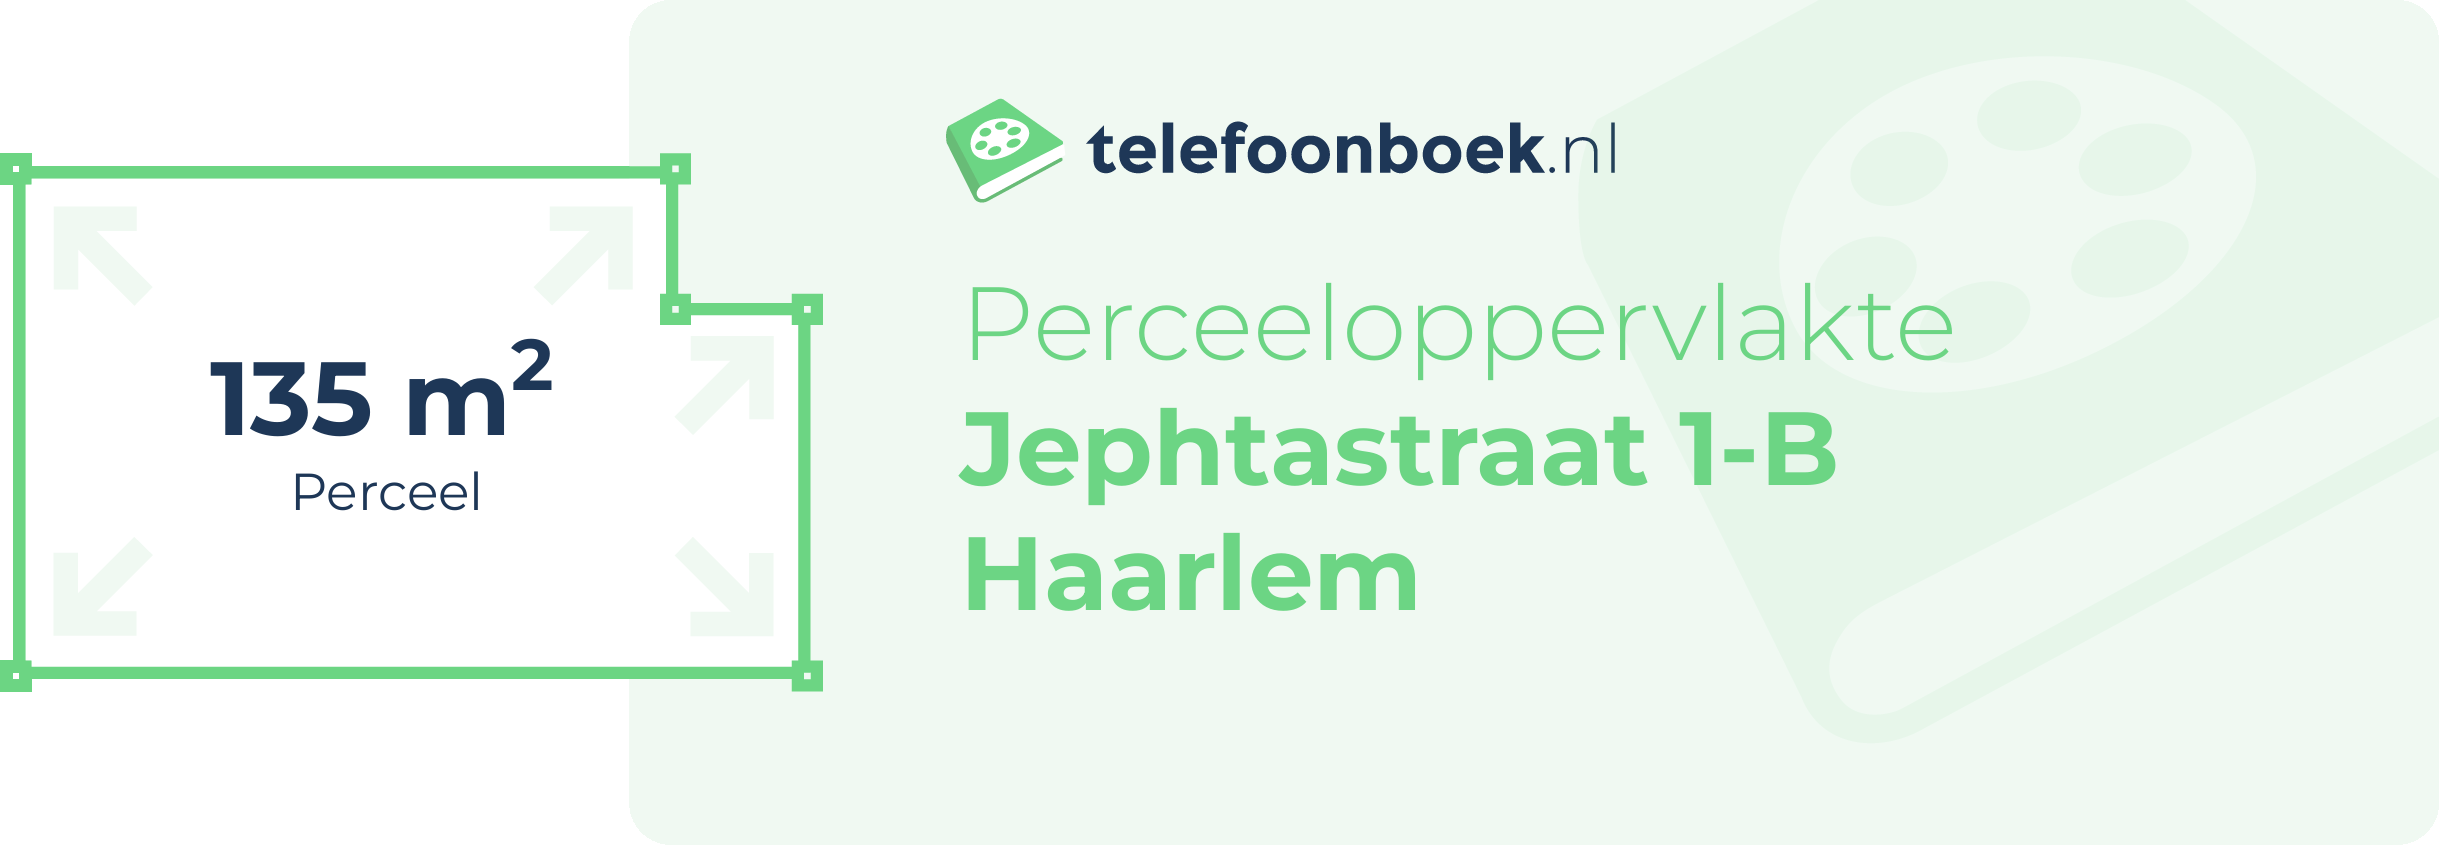 Perceeloppervlakte Jephtastraat 1-B Haarlem